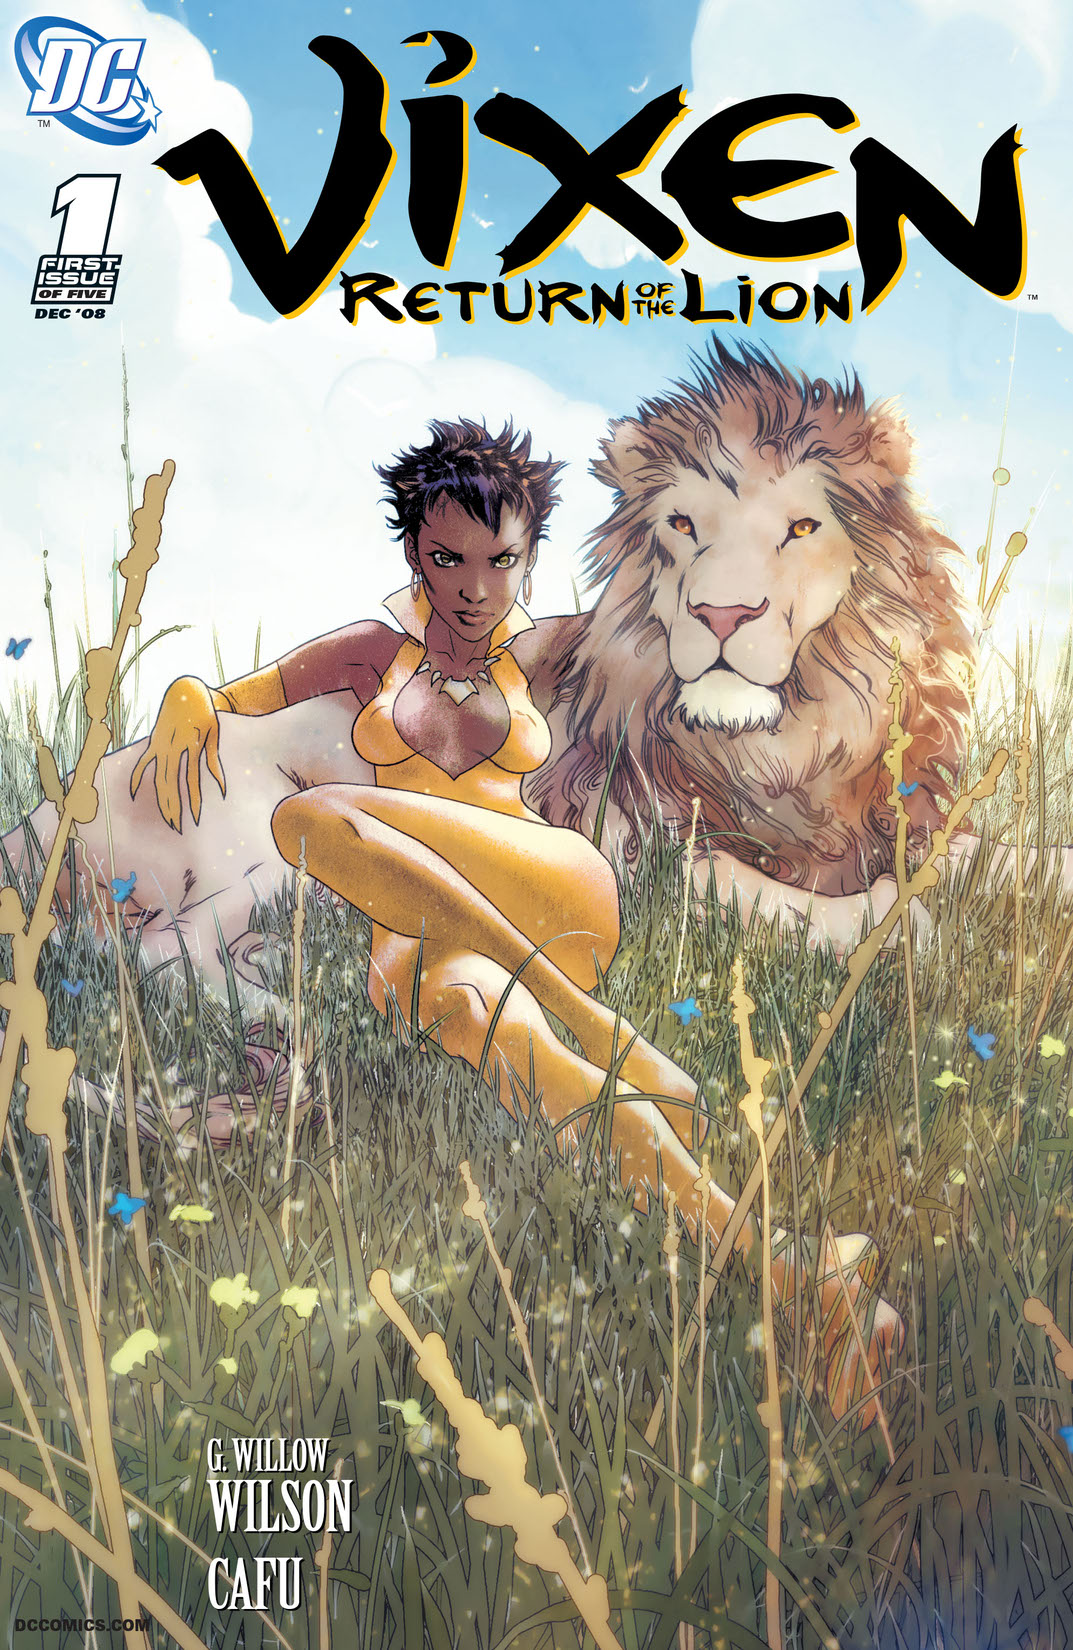 Vixen: Return of the Lion #1 preview images